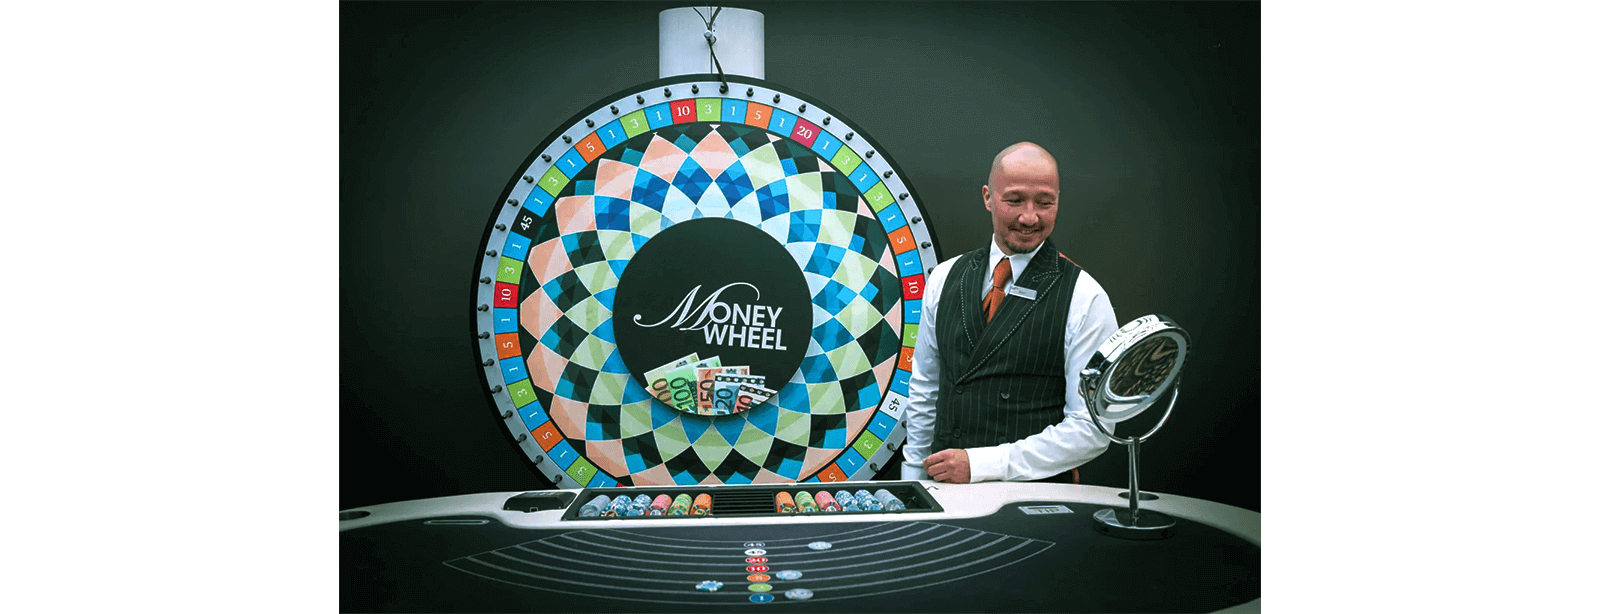 OnlineCasinoHEX.nl   Big Wheel in Holland Casino Rad van Fortuin